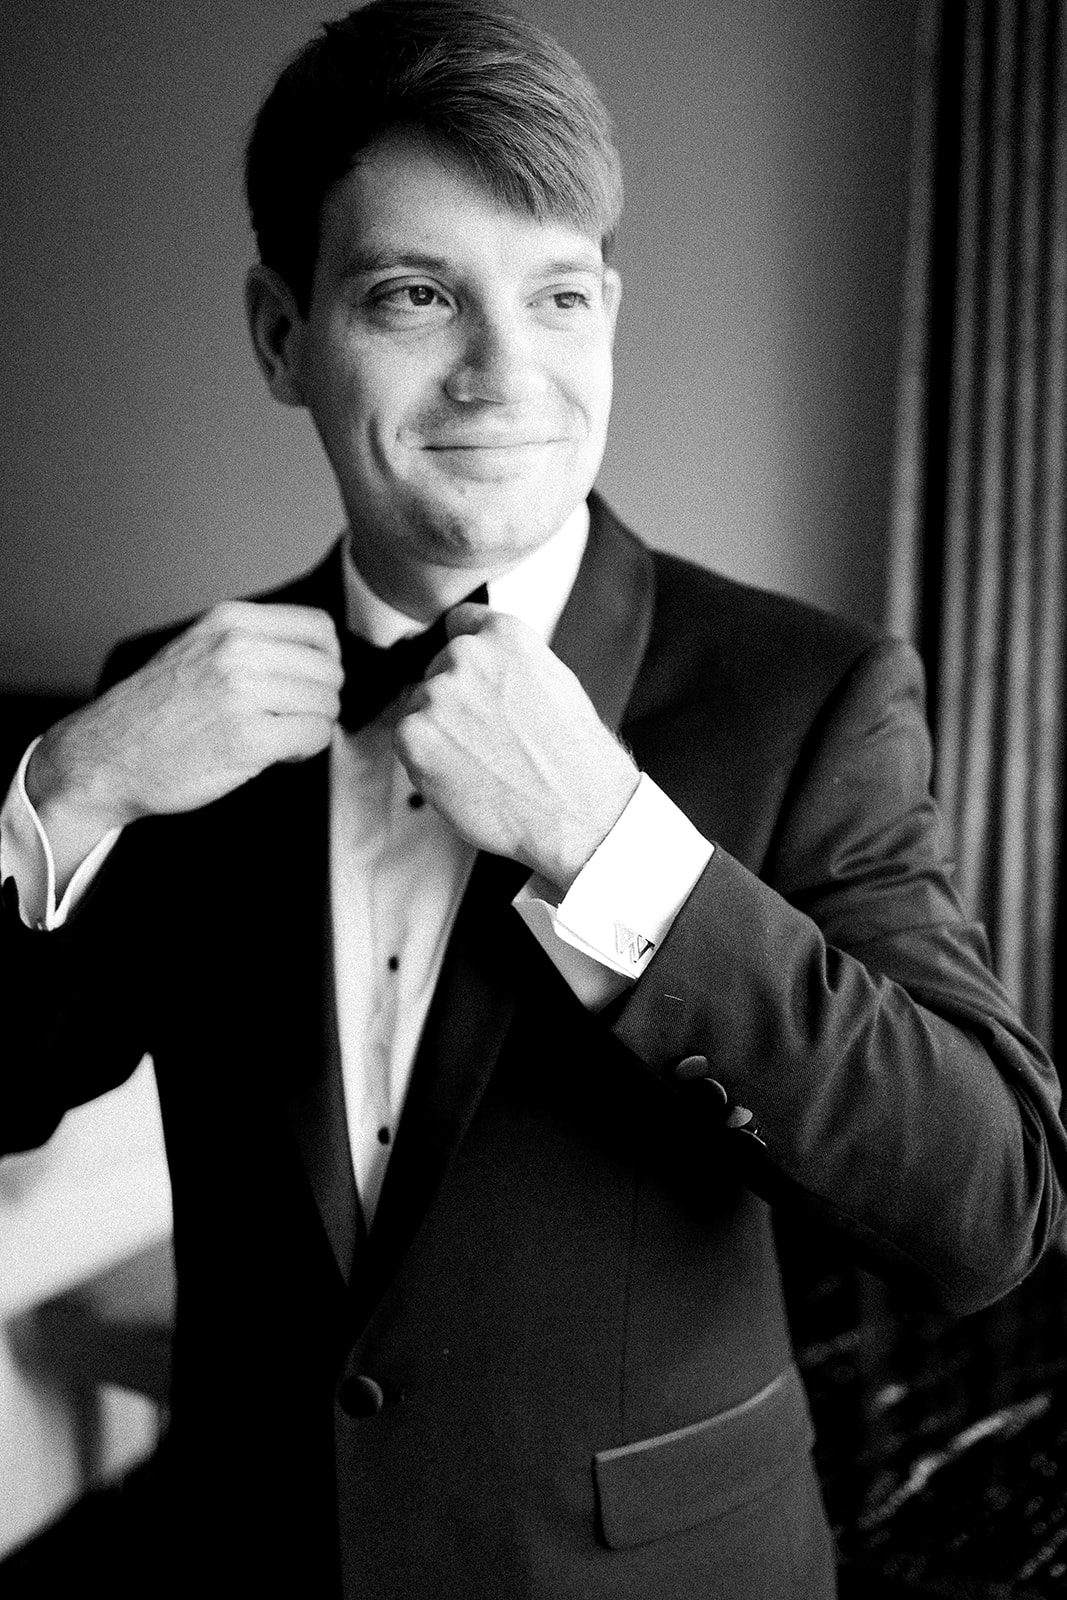 Black and white groom portrait